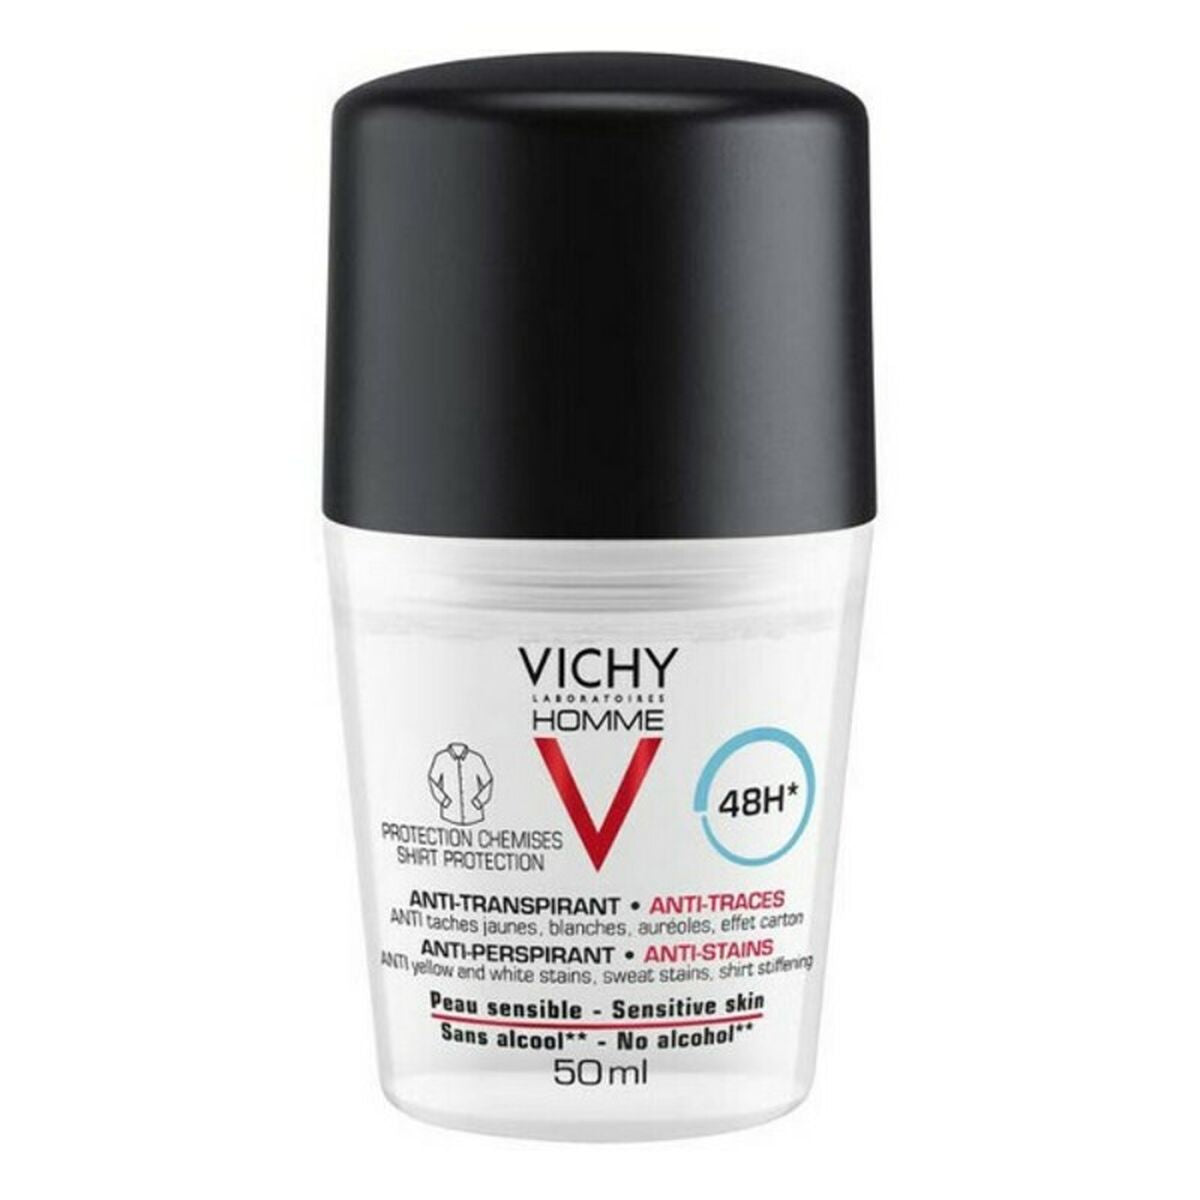 Roll-On Deodorant Vichy Homme Antiperspirant 48 hours 50 ml-0